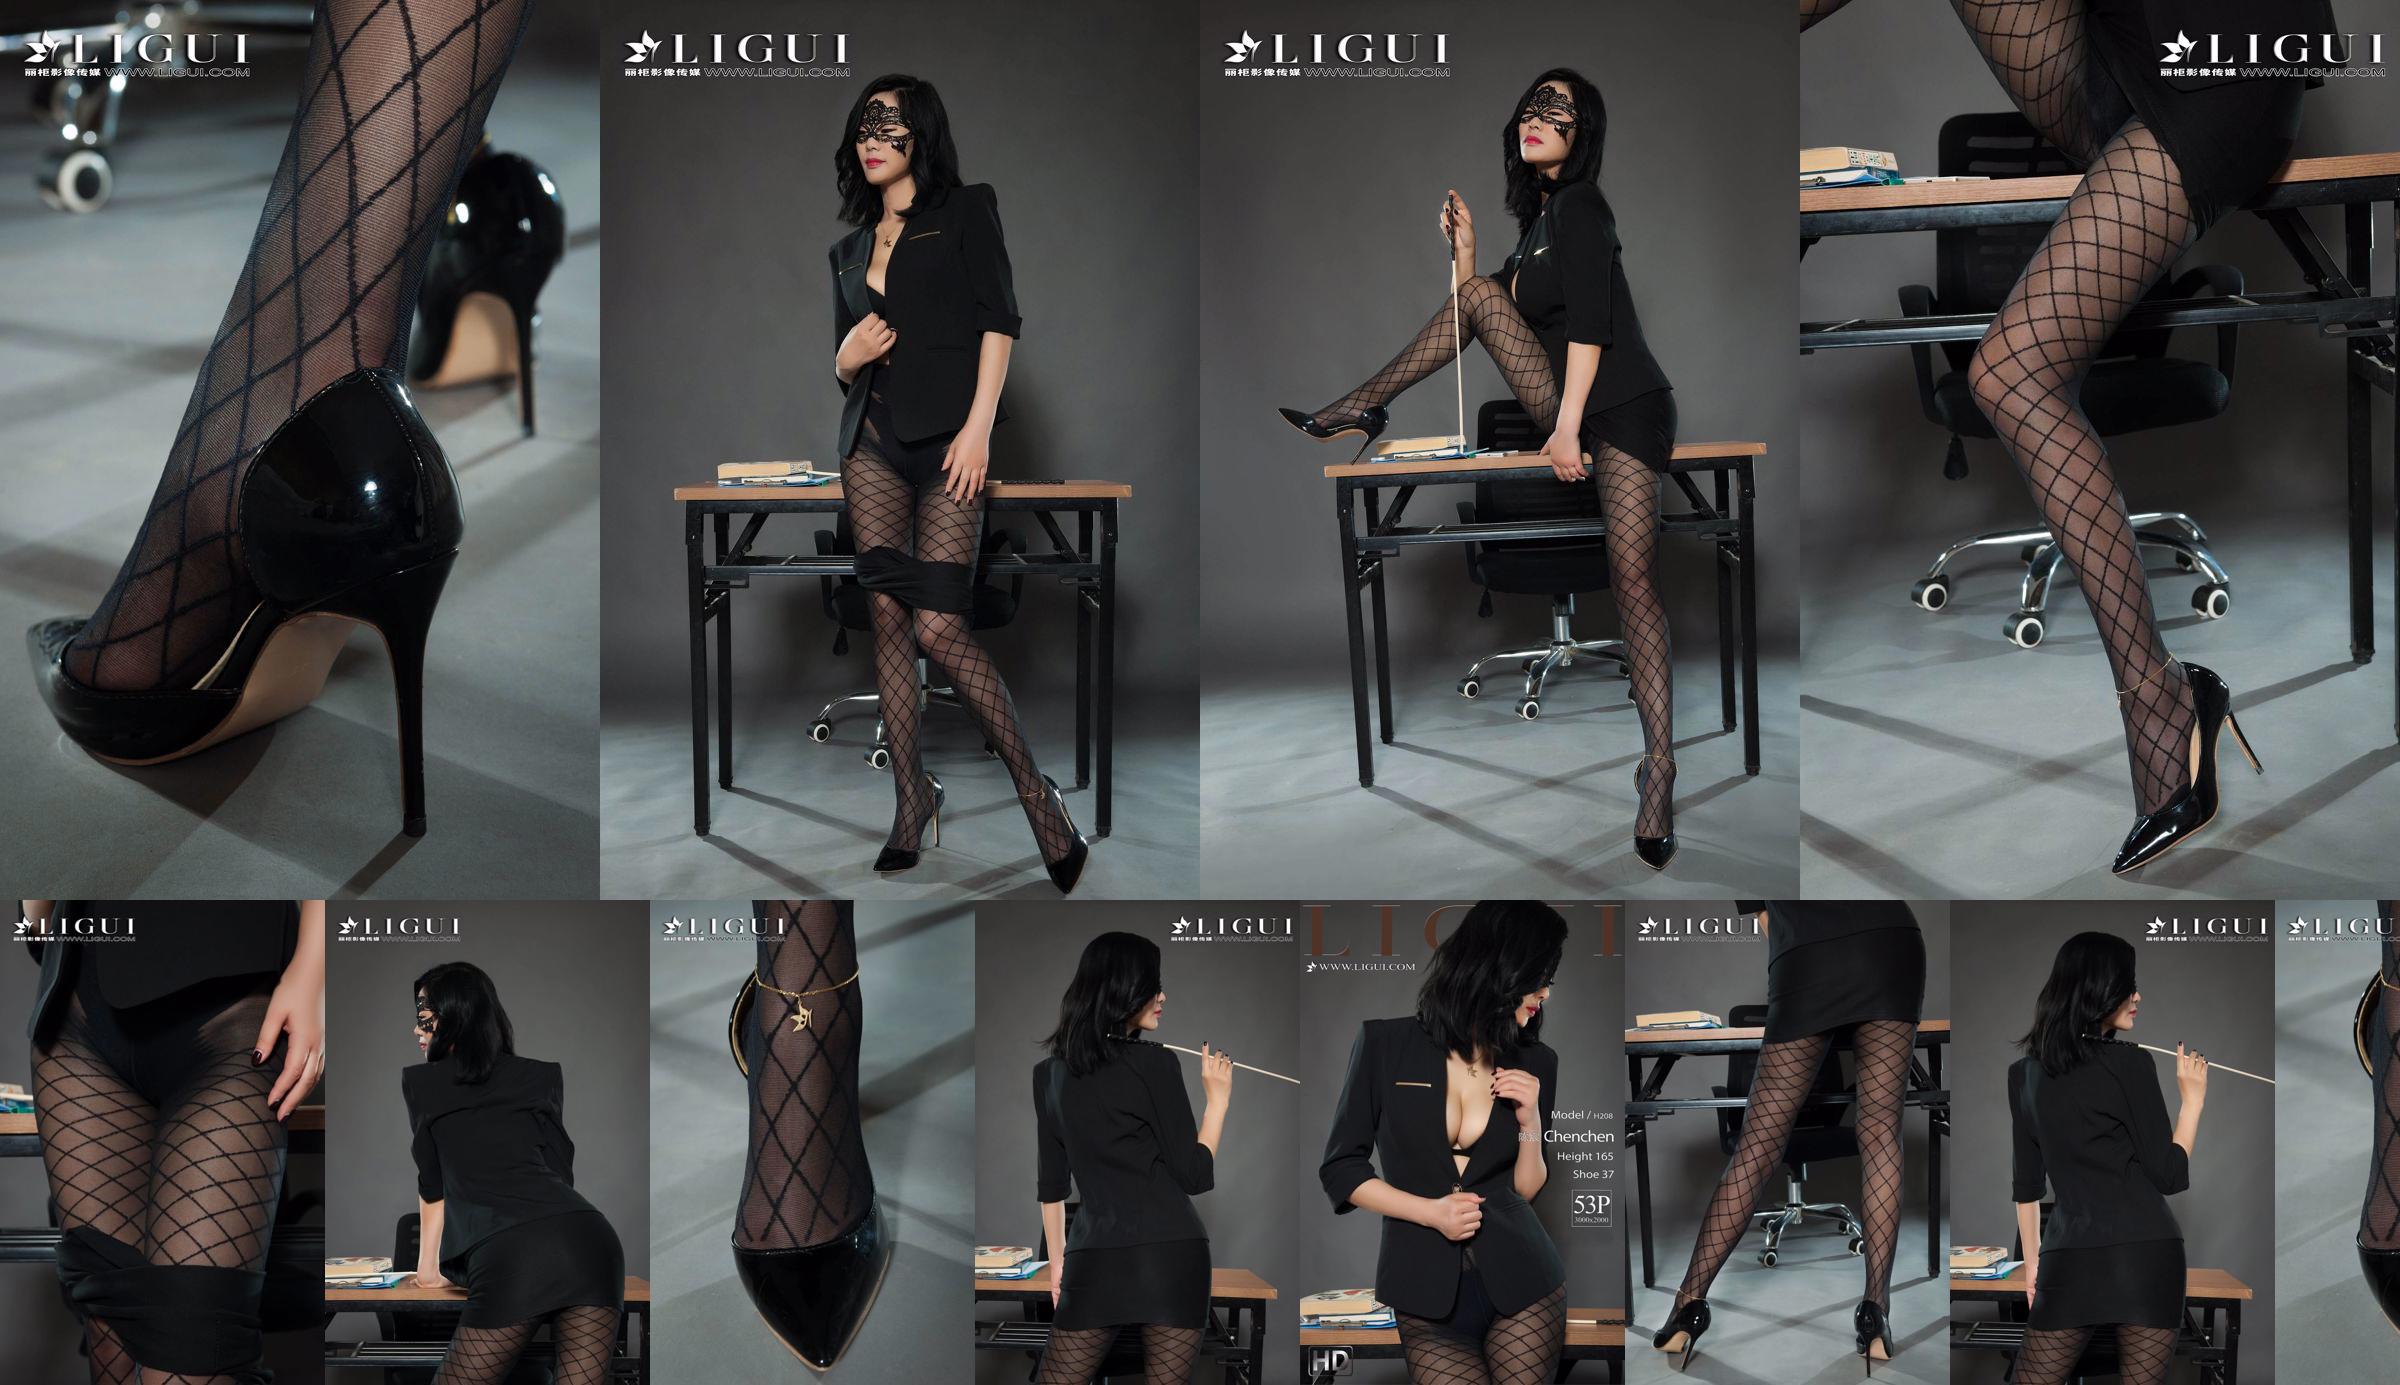 Modelo de pierna Chen Chen "Black Silk Milf" [Ligui Liguil] Belleza de Internet No.6ee85b Página 1